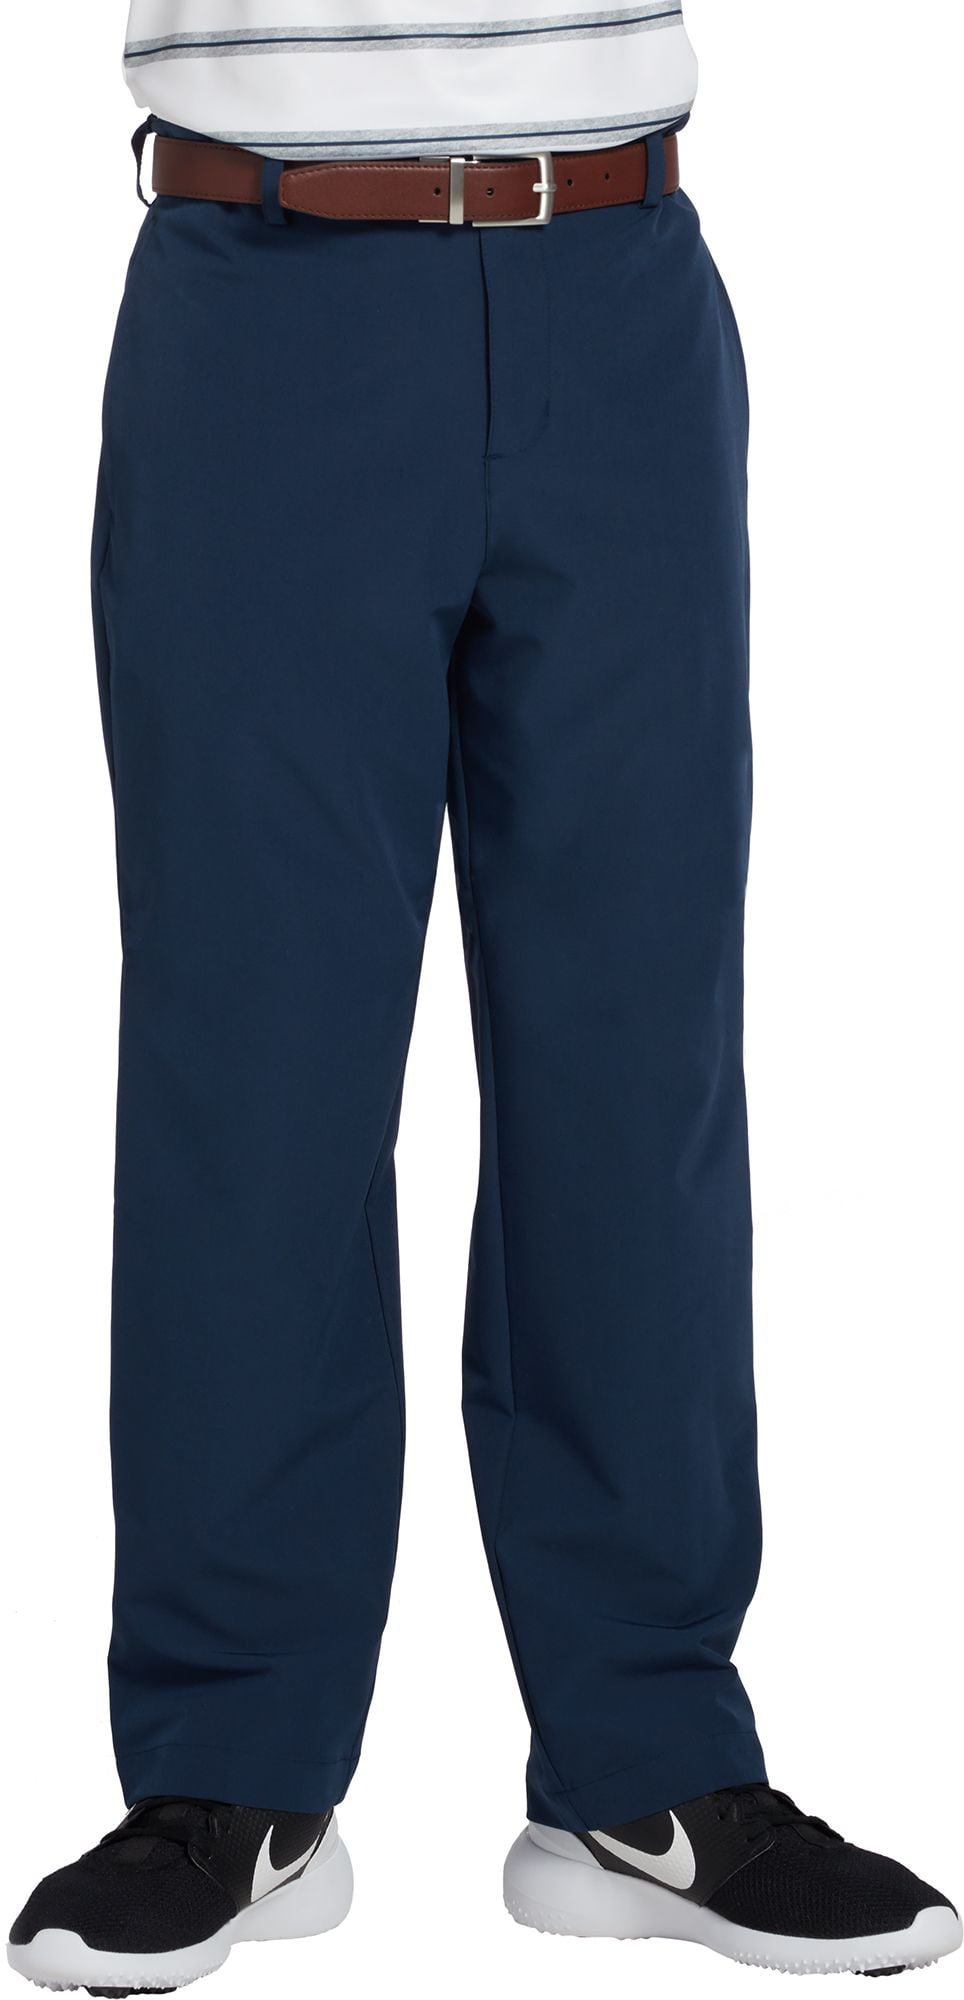 Slazenger Boys' Core Golf Pants - Walmart.com - Walmart.com